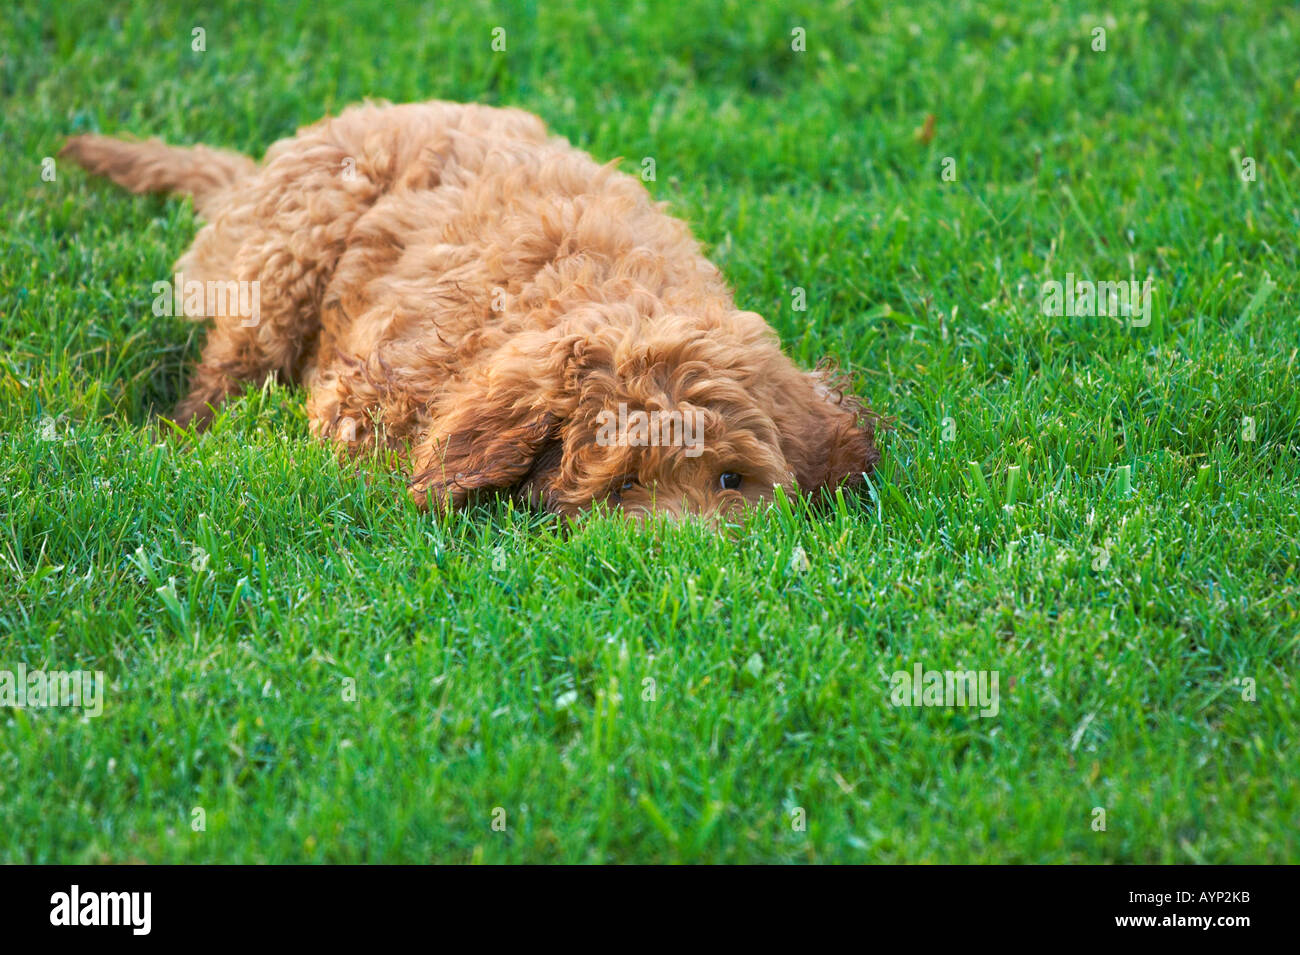 Golden Doodle Hunde Welpen Hund flauschige lockiges Haar spielen grünen Rasen-Neuzüchtung Stockfoto